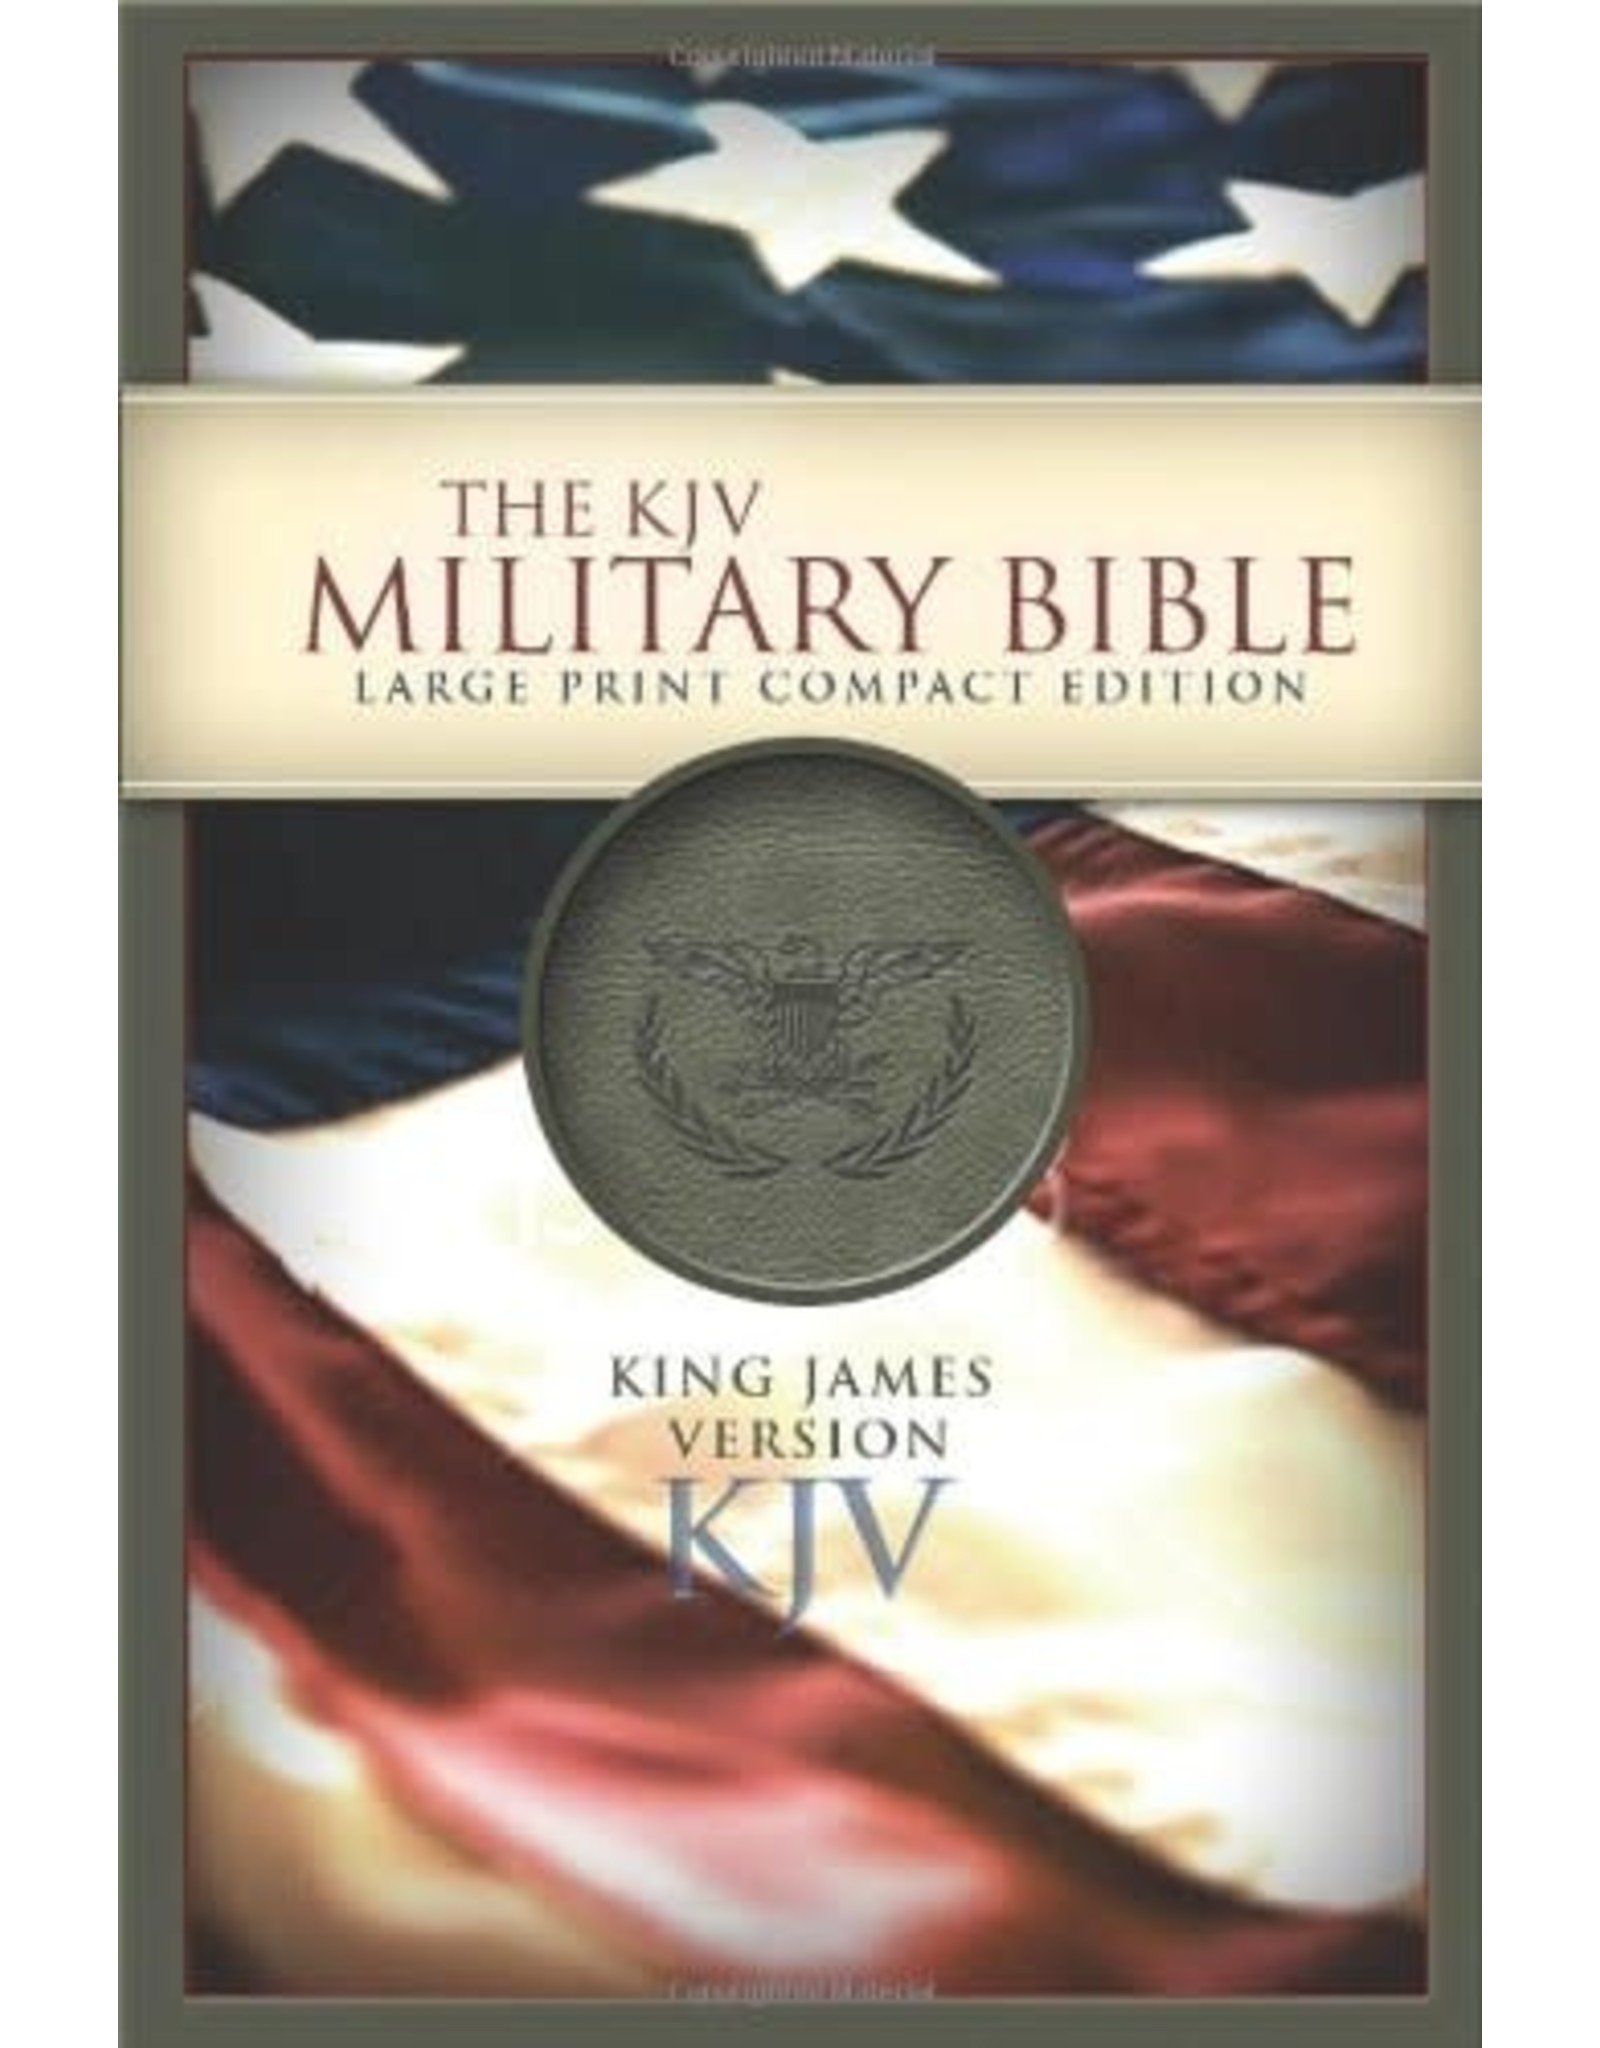 KJV Military Bible Large Print Compact